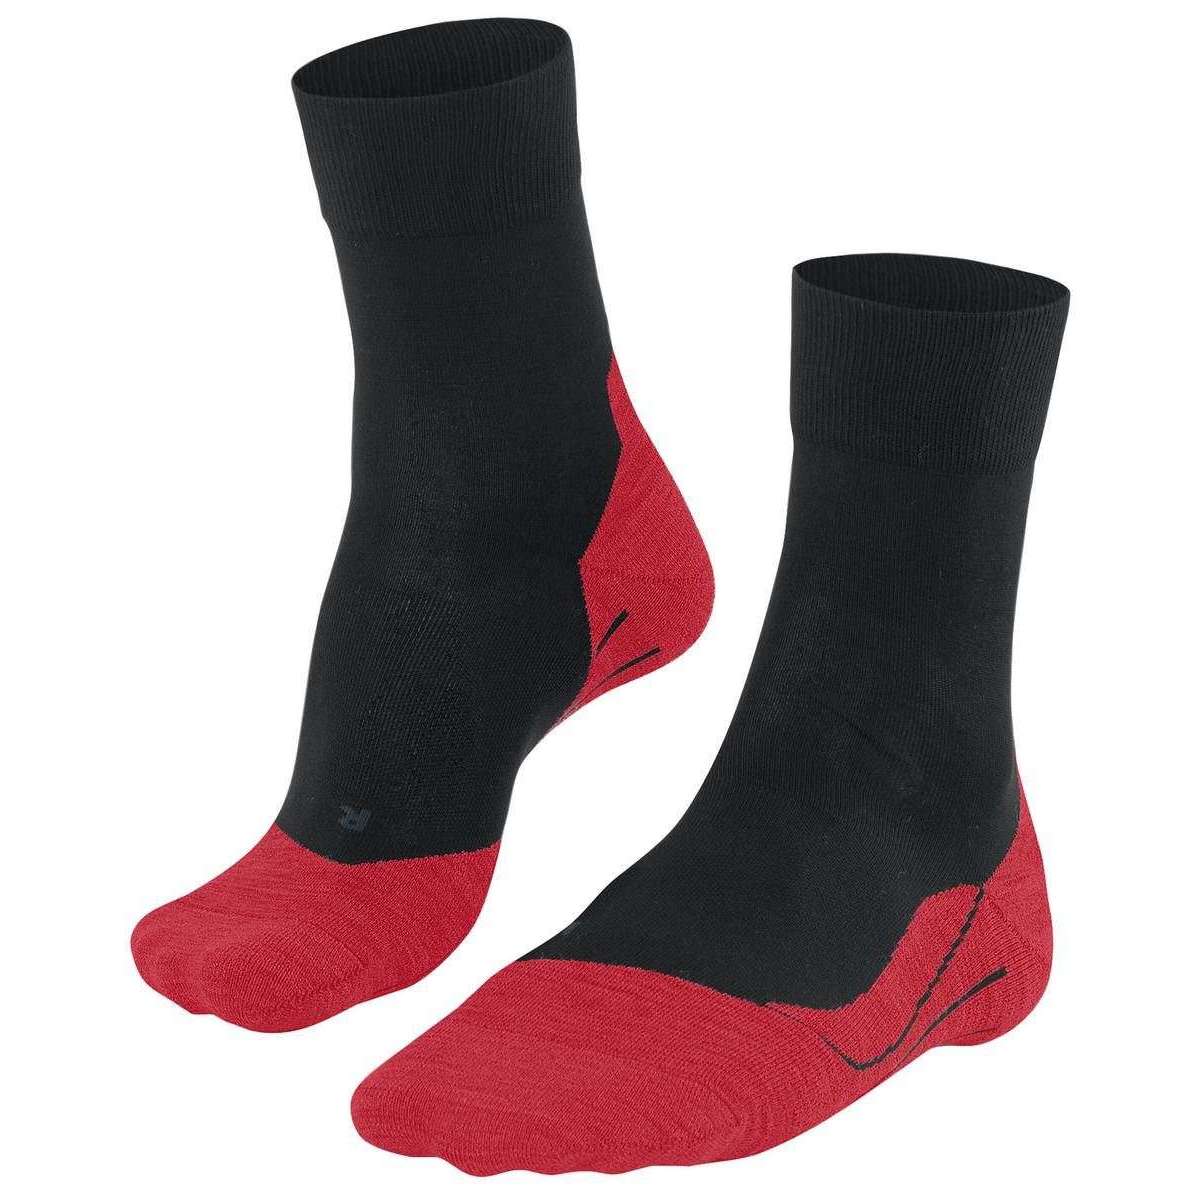 Falke RU4 Endurance Socks - Black